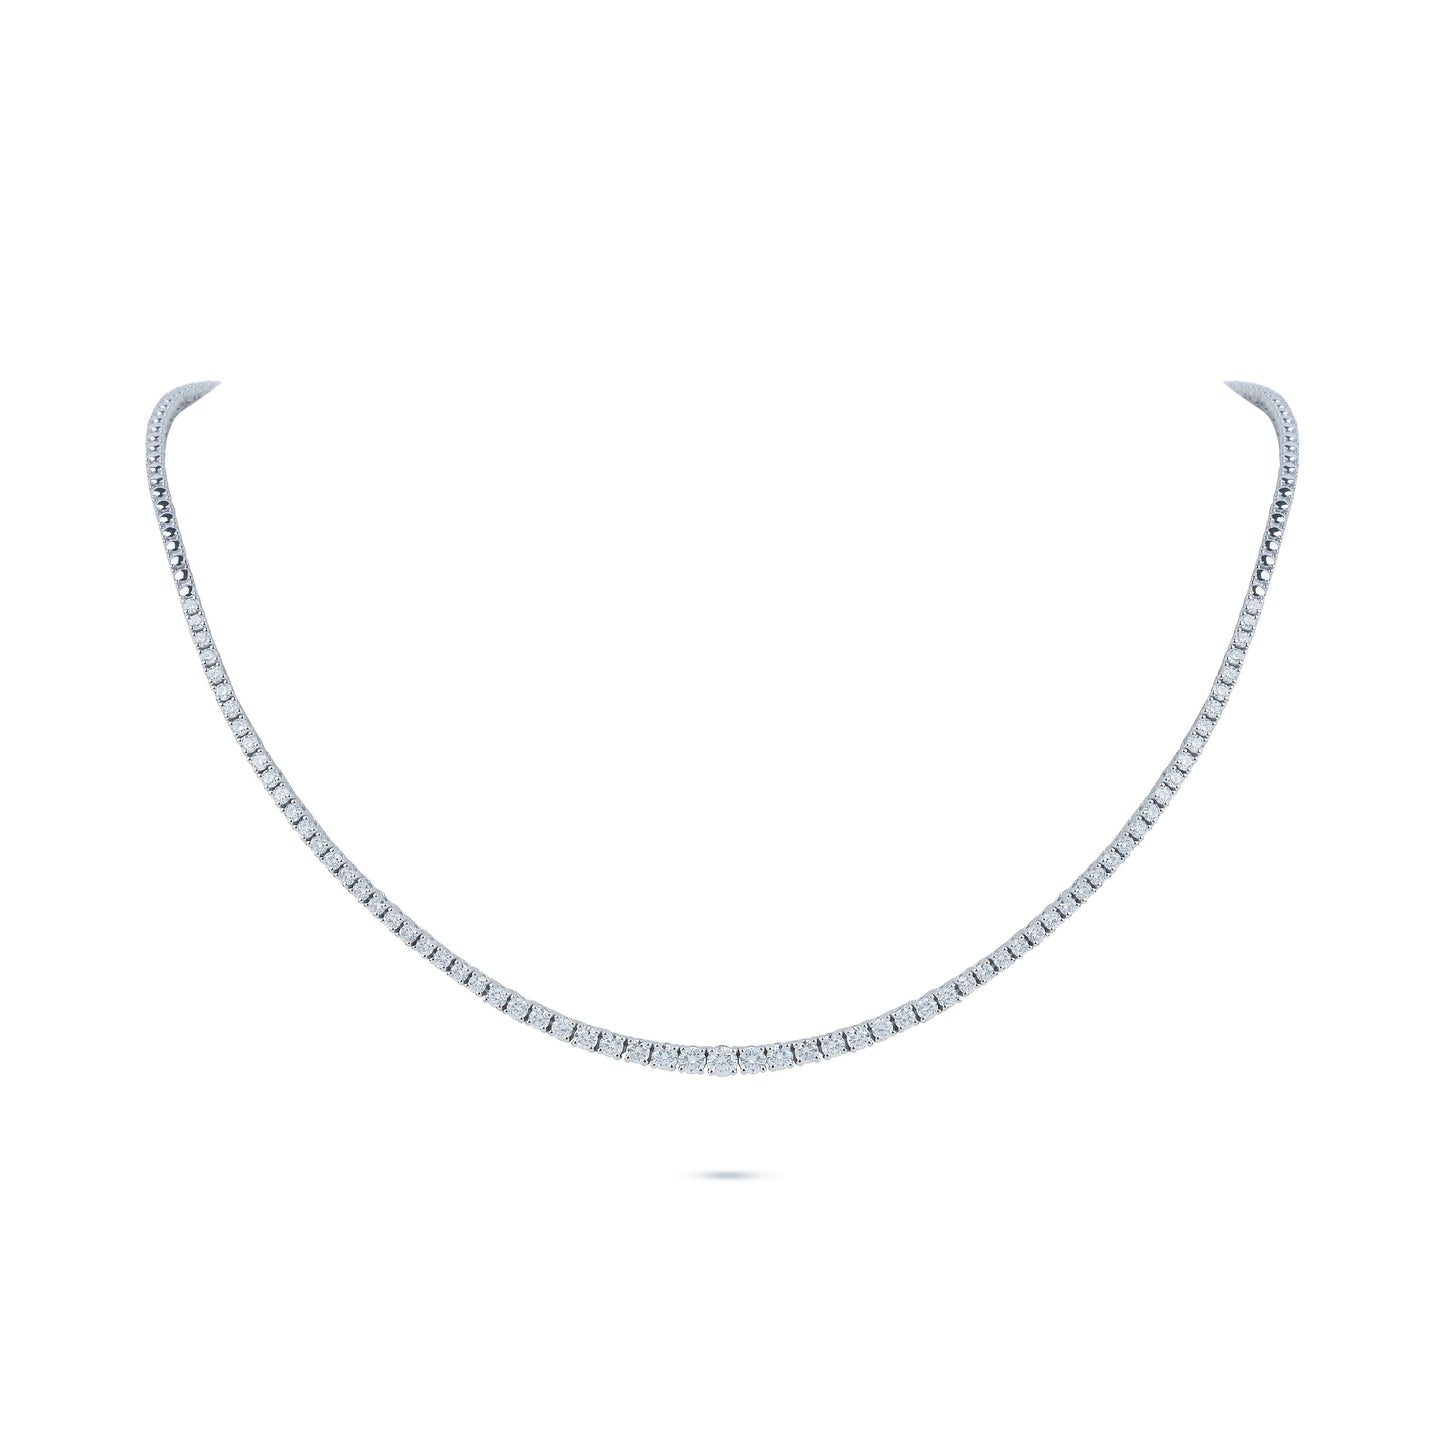 3.05 Carats Diamond Tennis Necklace